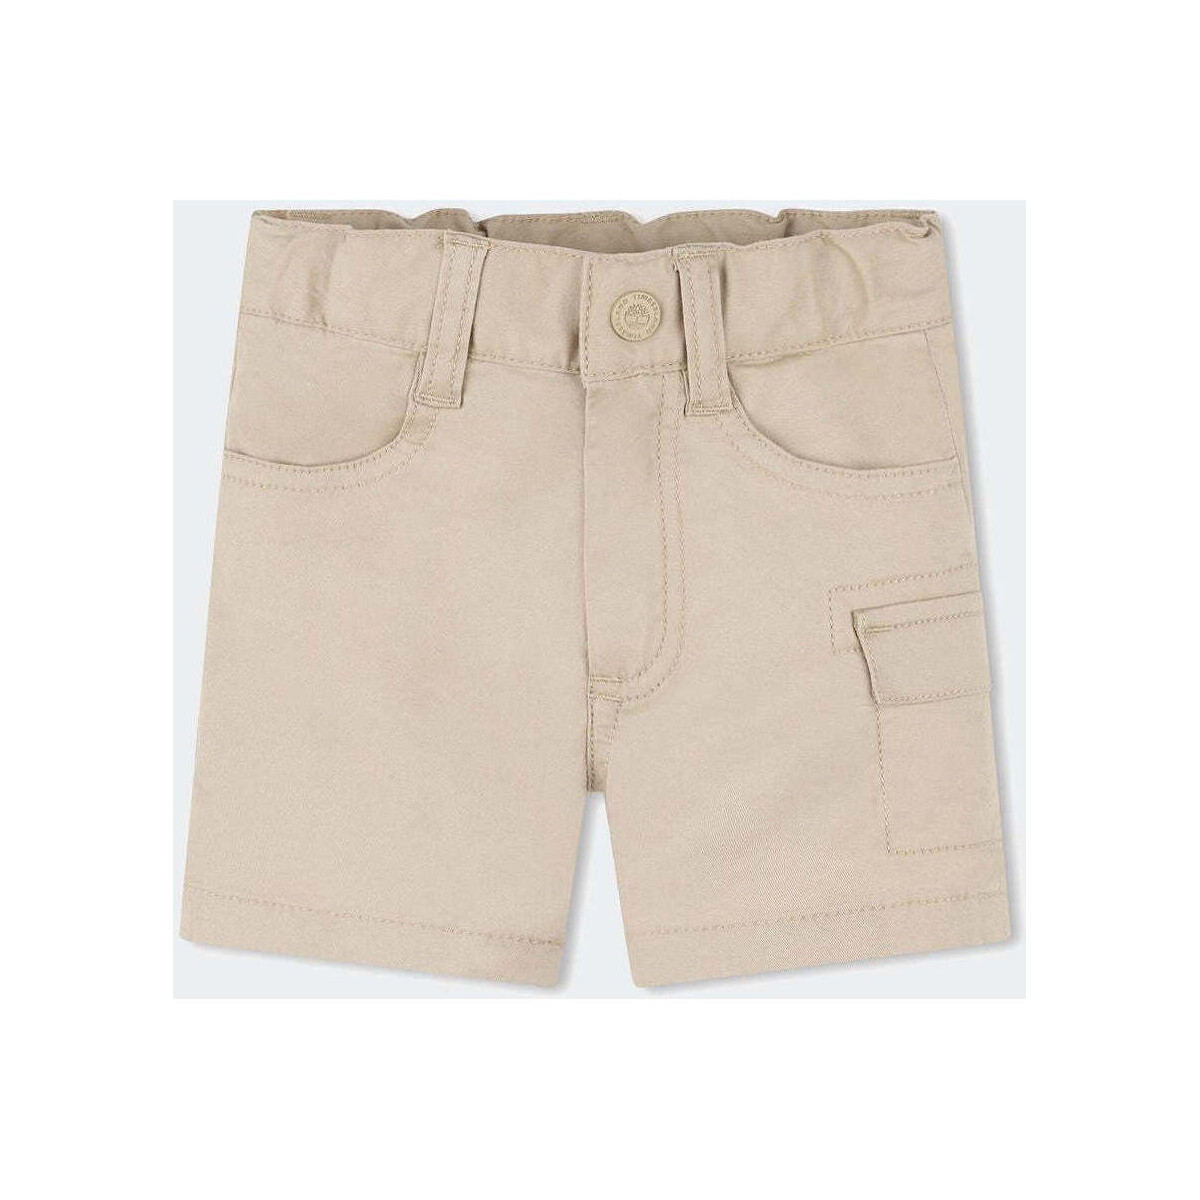 Vêtements Garçon Shorts / Bermudas Timberland  Marron